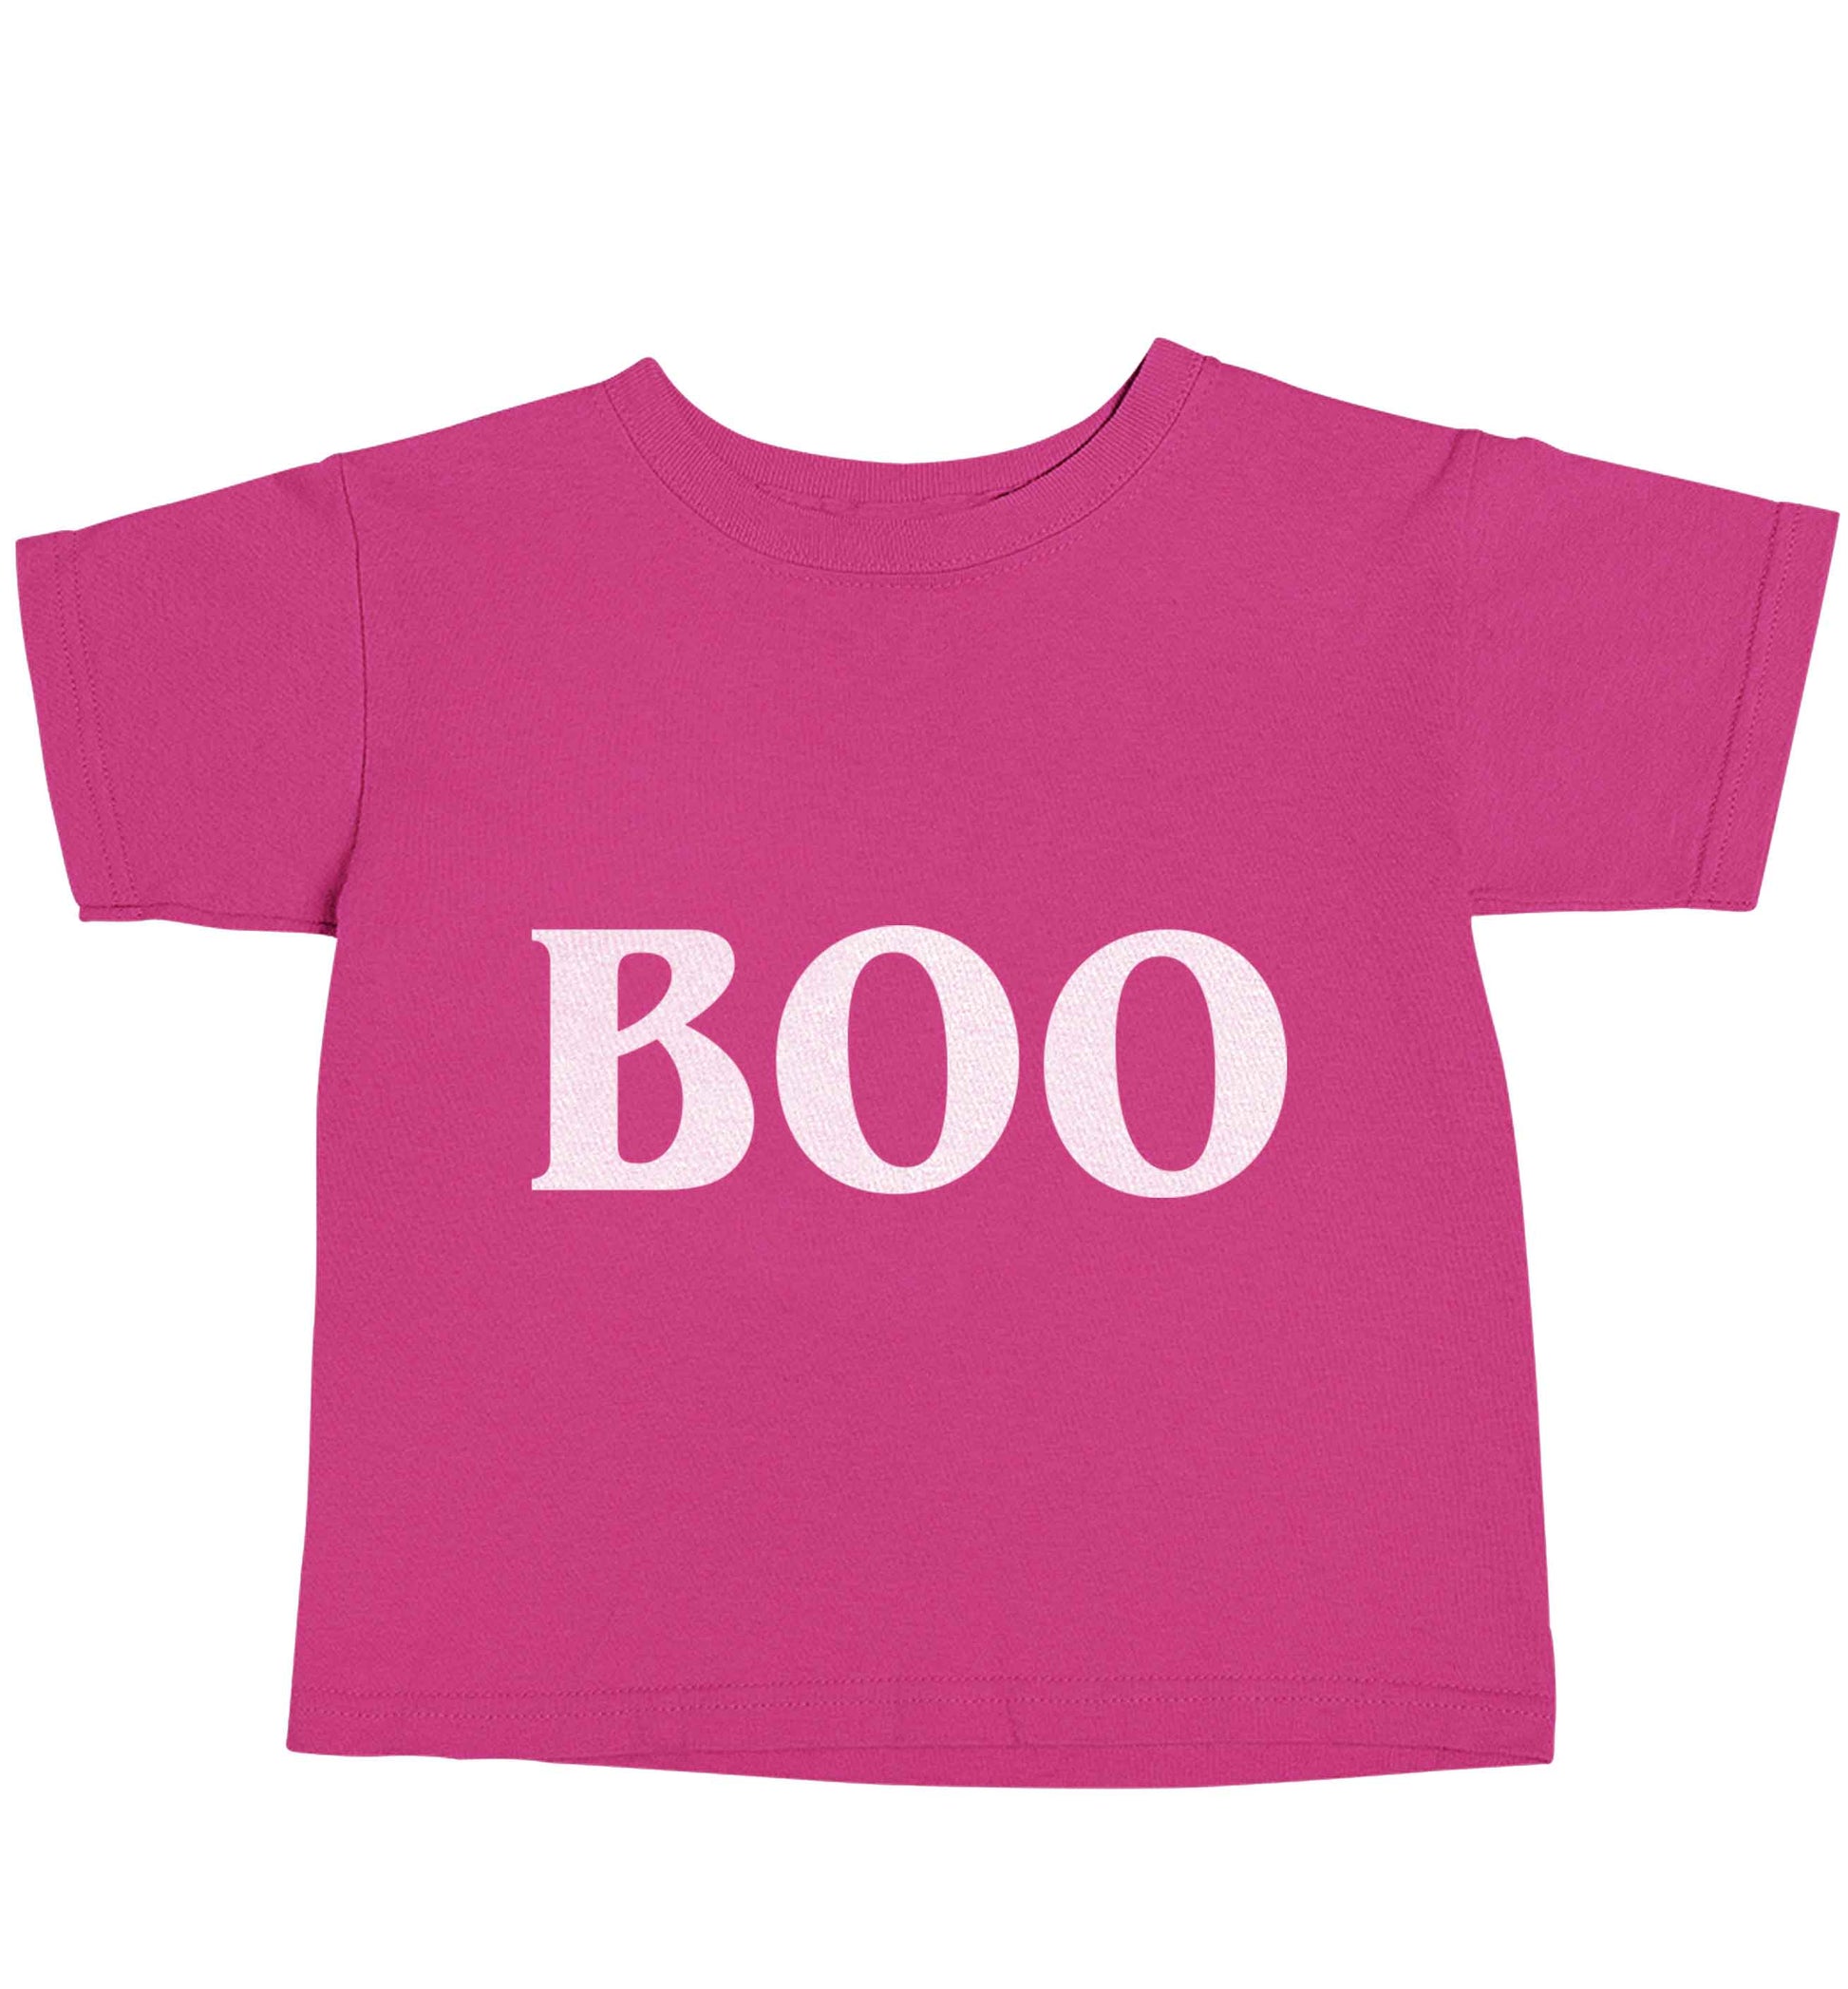 Boo pink baby toddler Tshirt 2 Years